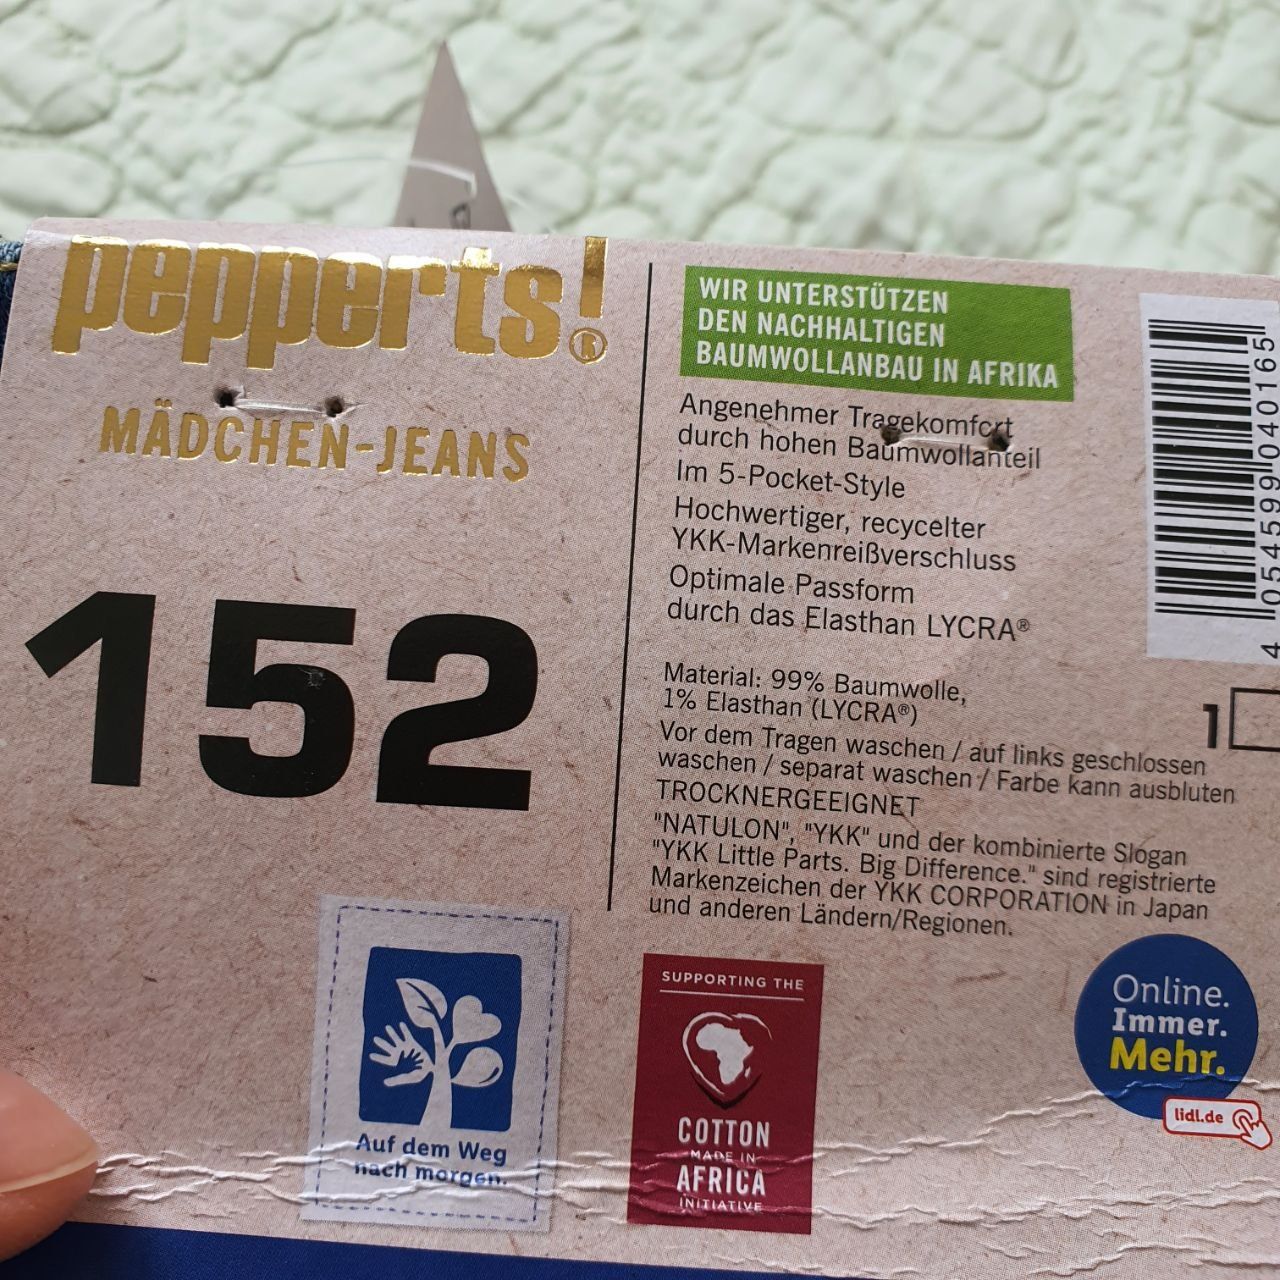 Blugi jeans Pepperts 152